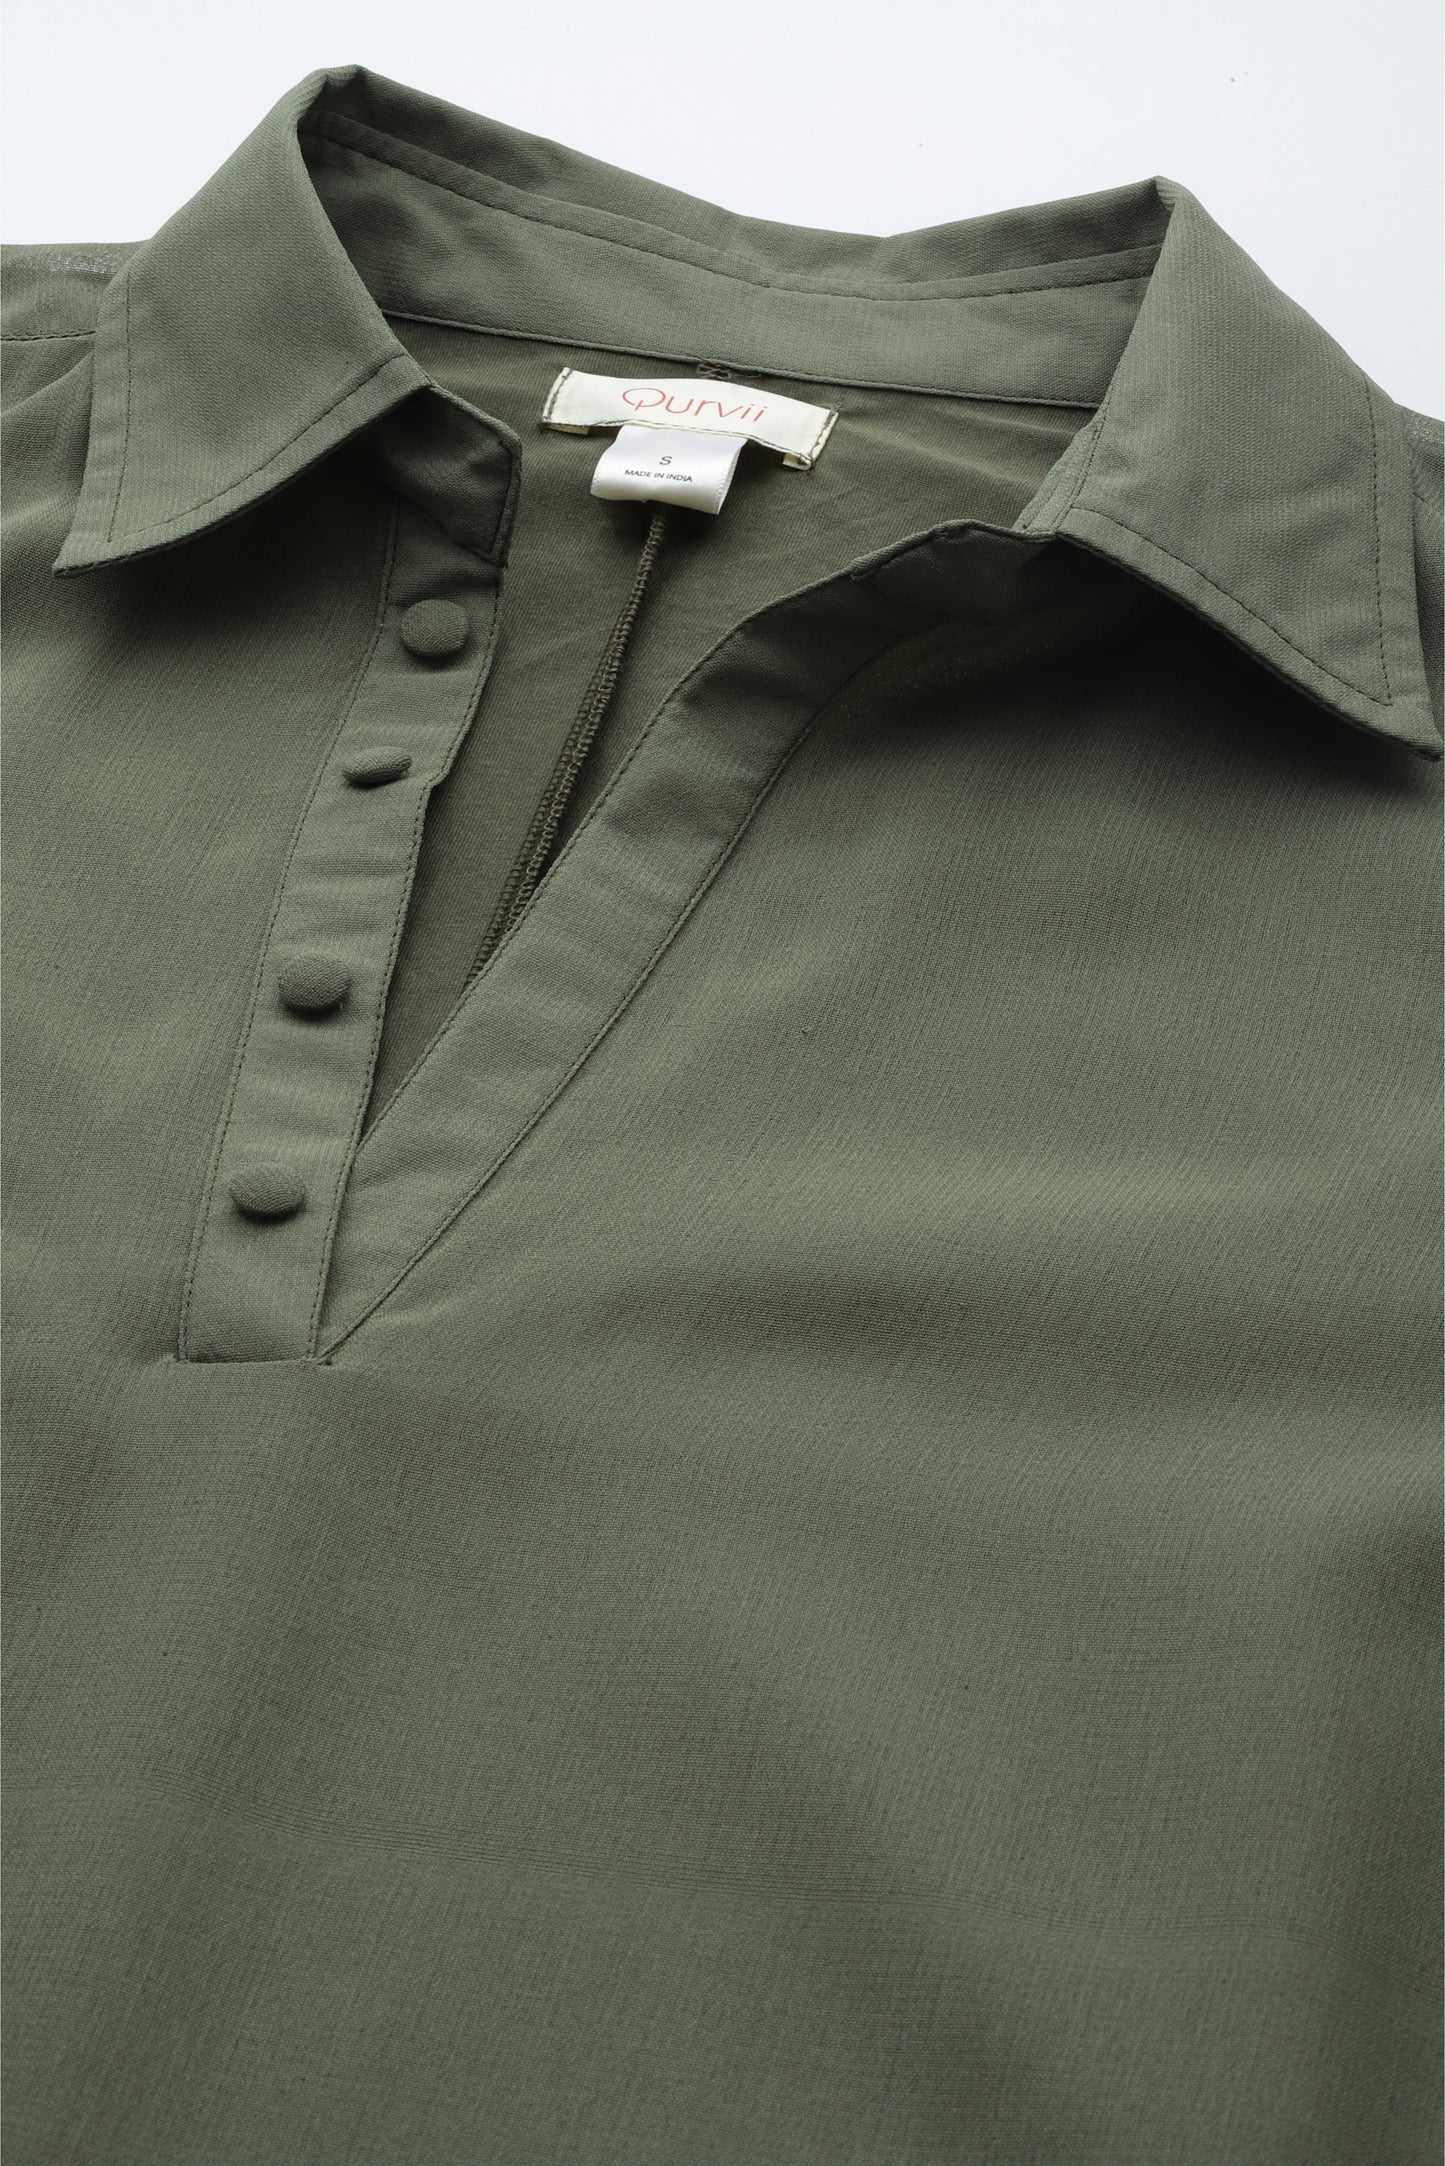 Olive colour Shirt dress